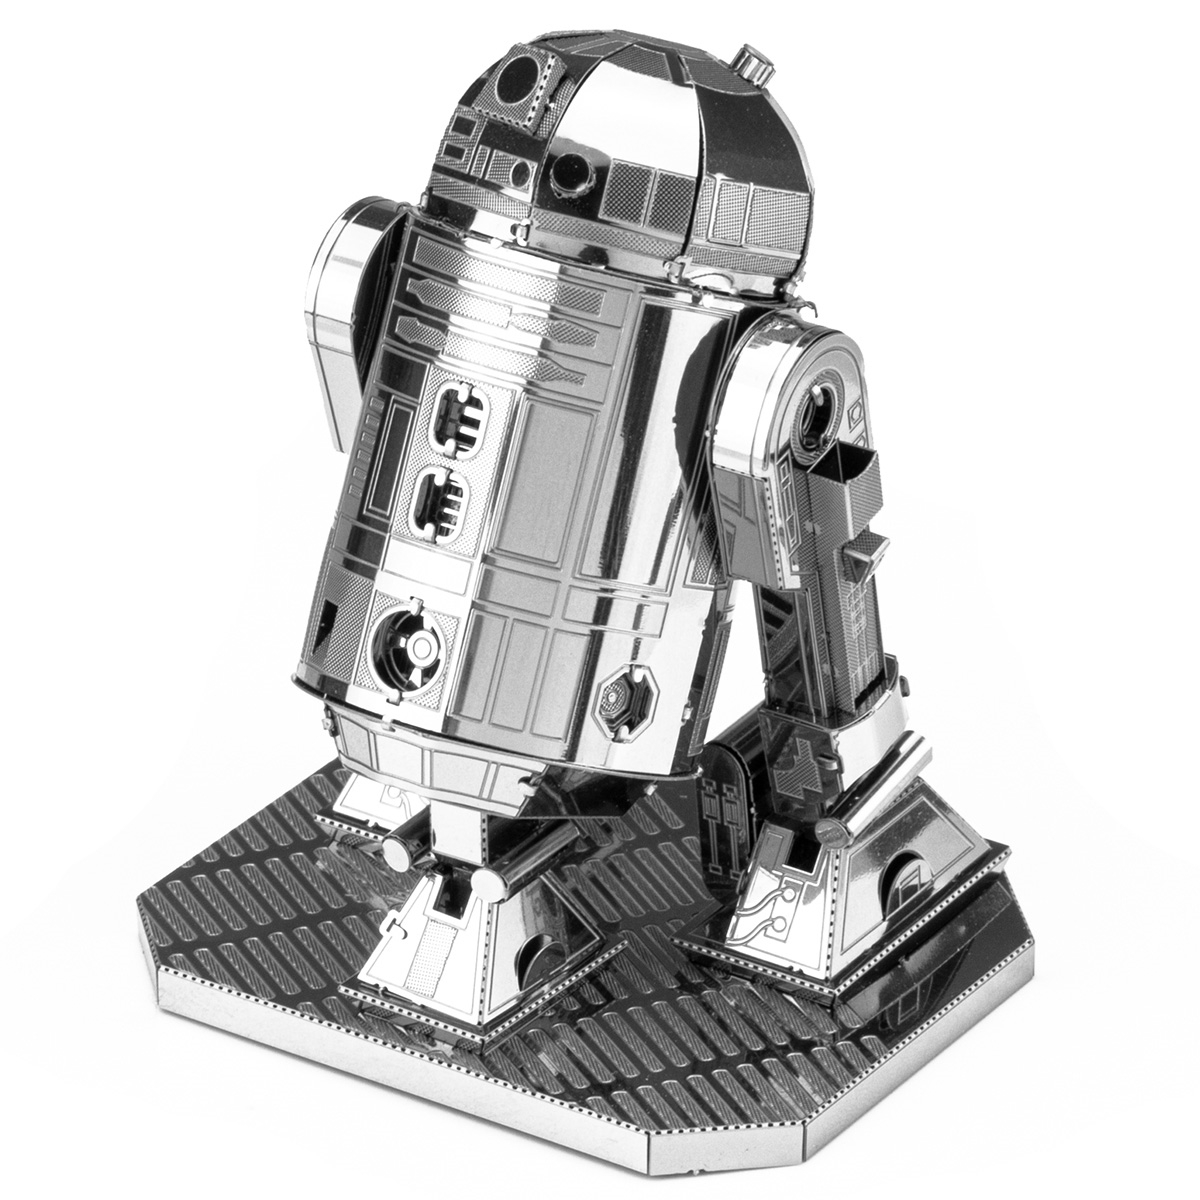 Star Wars Weekend 2015 Metal Earth R2-D2 3D Model Kit 